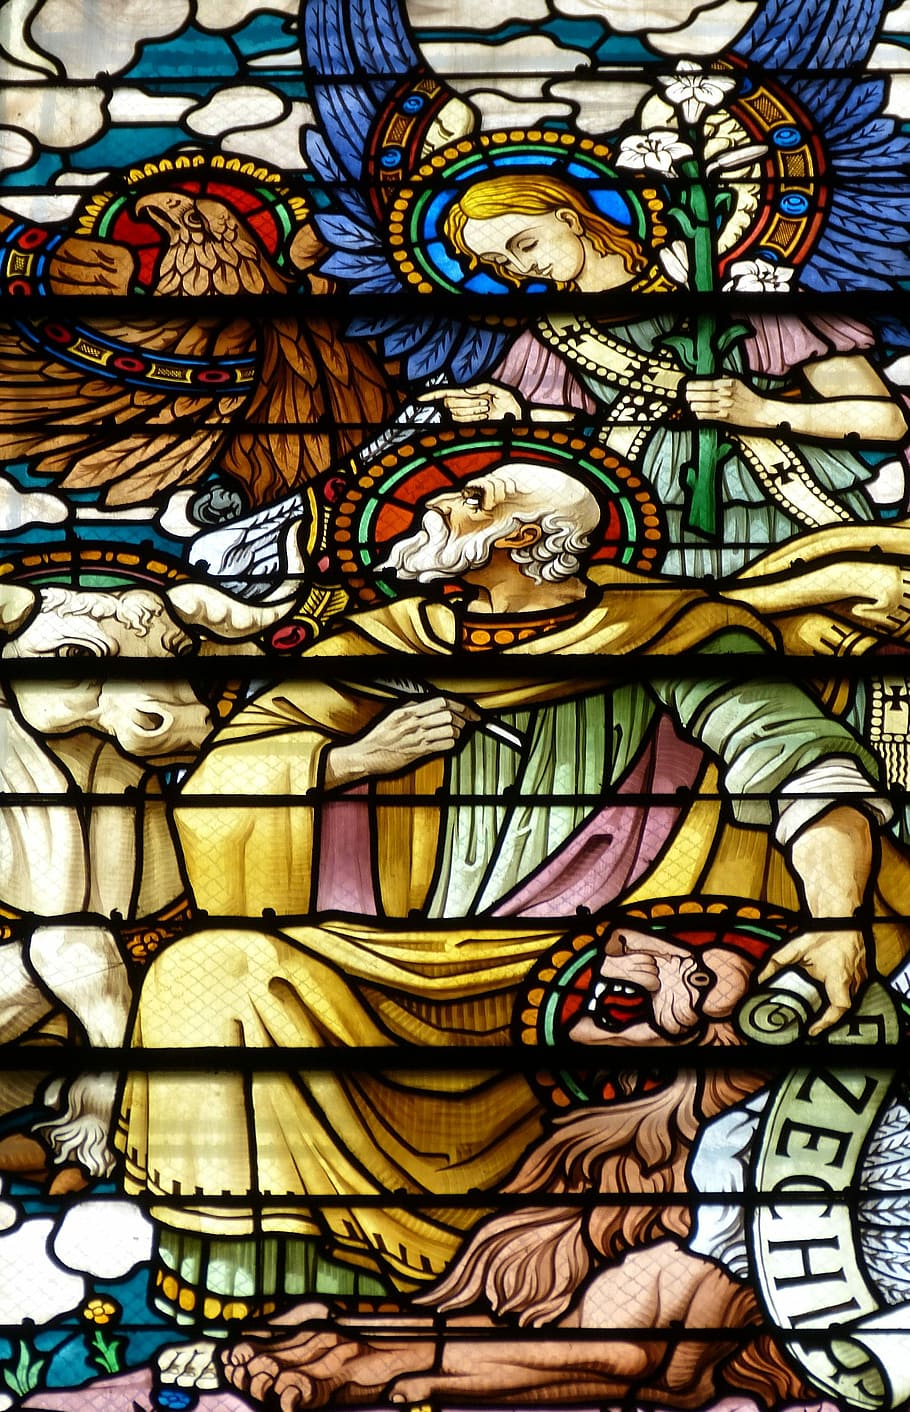 Prophet, Ezekiel, Ezechiel, Lion, Bull, adler, angel, church, window, church window